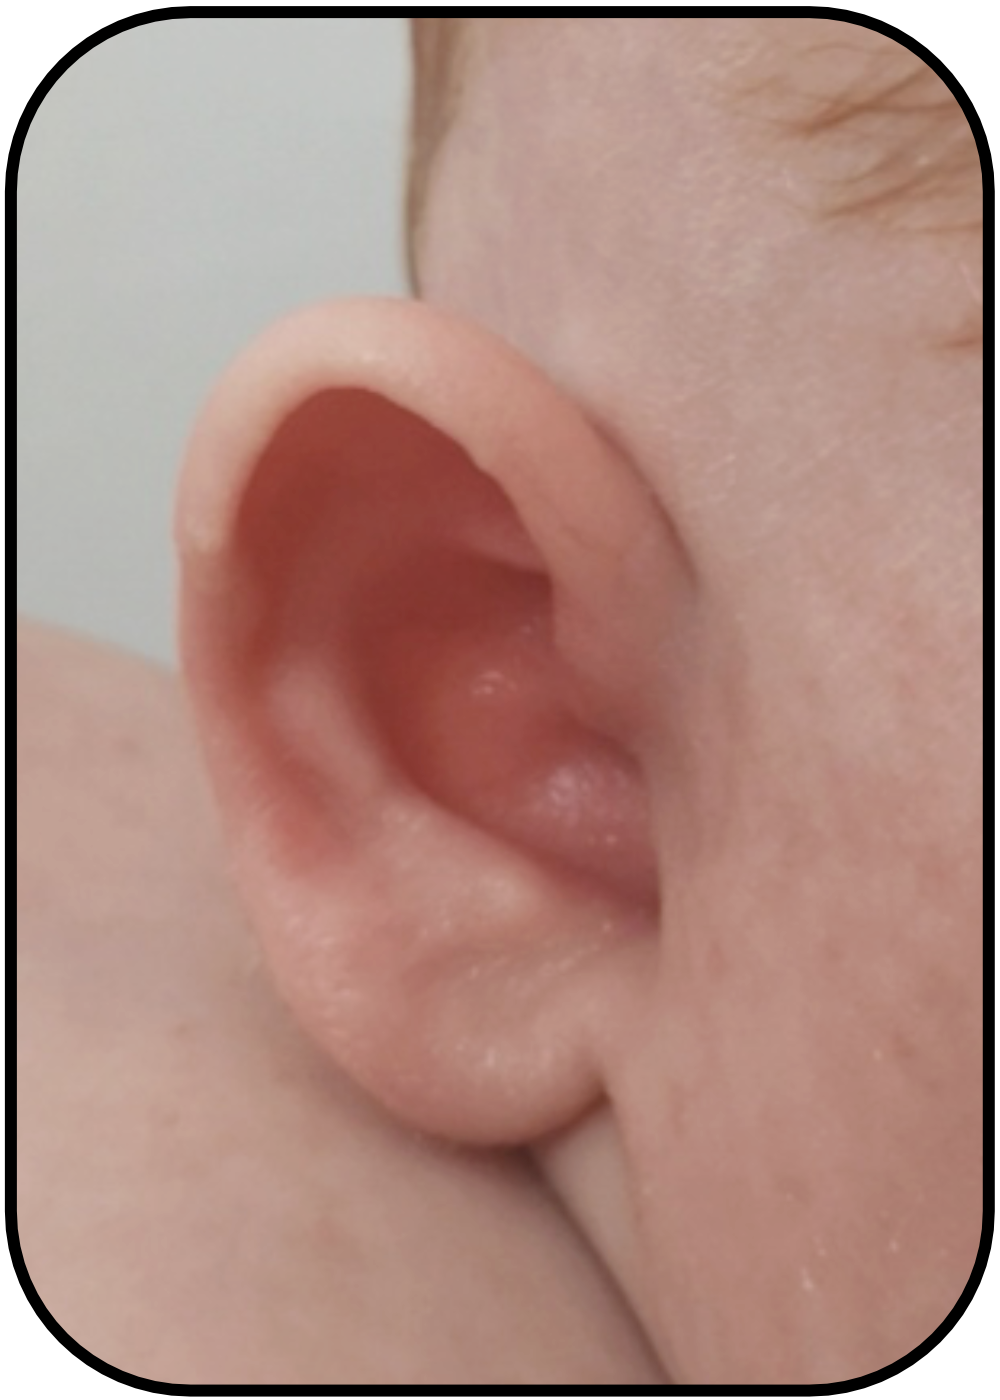 Baby's Ear folded over